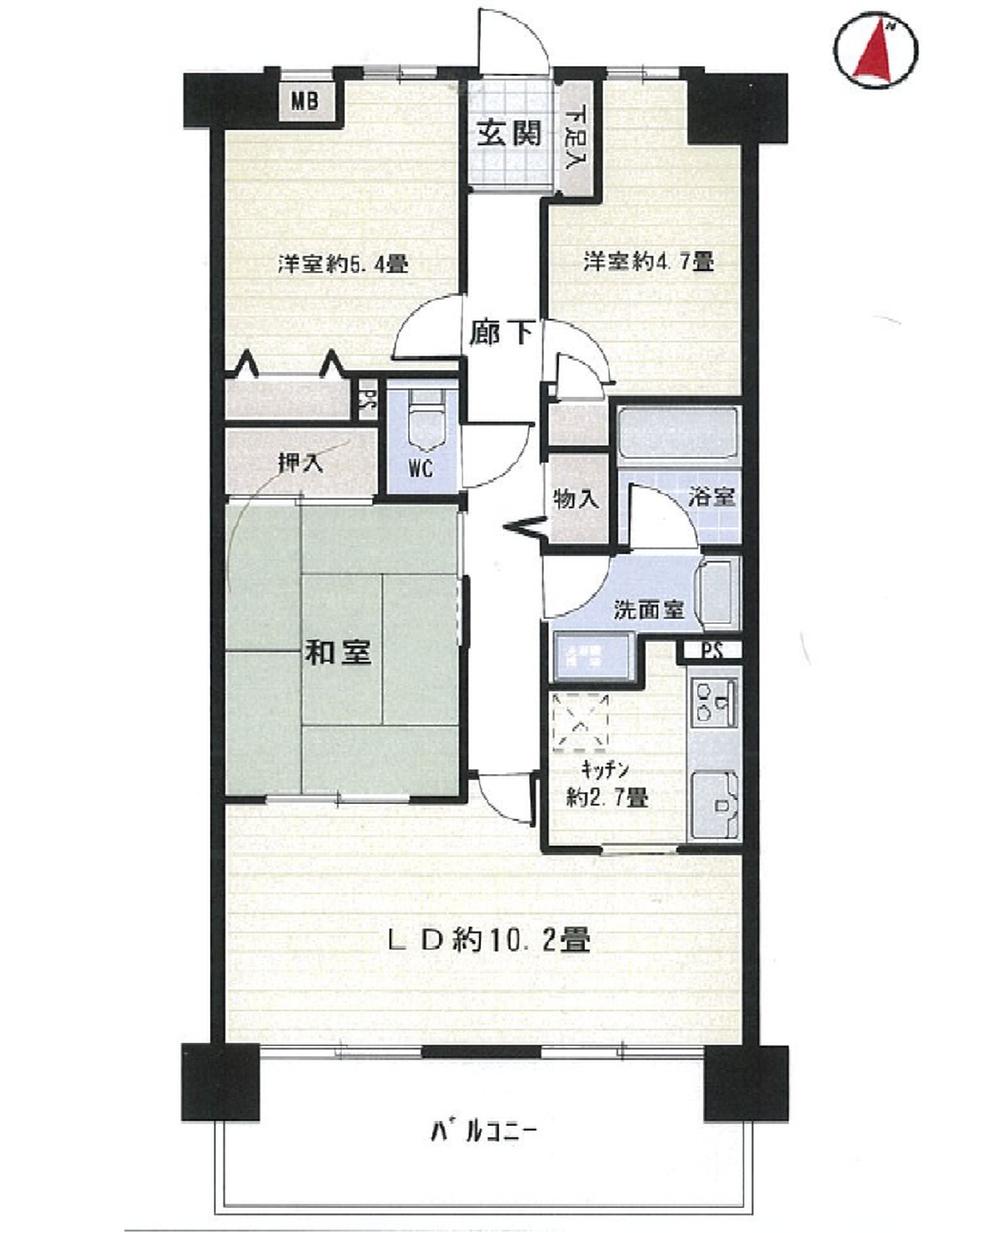 Floor plan. 3LDK, Price 12.5 million yen, Occupied area 68.44 sq m , Balcony area 10.44 sq m